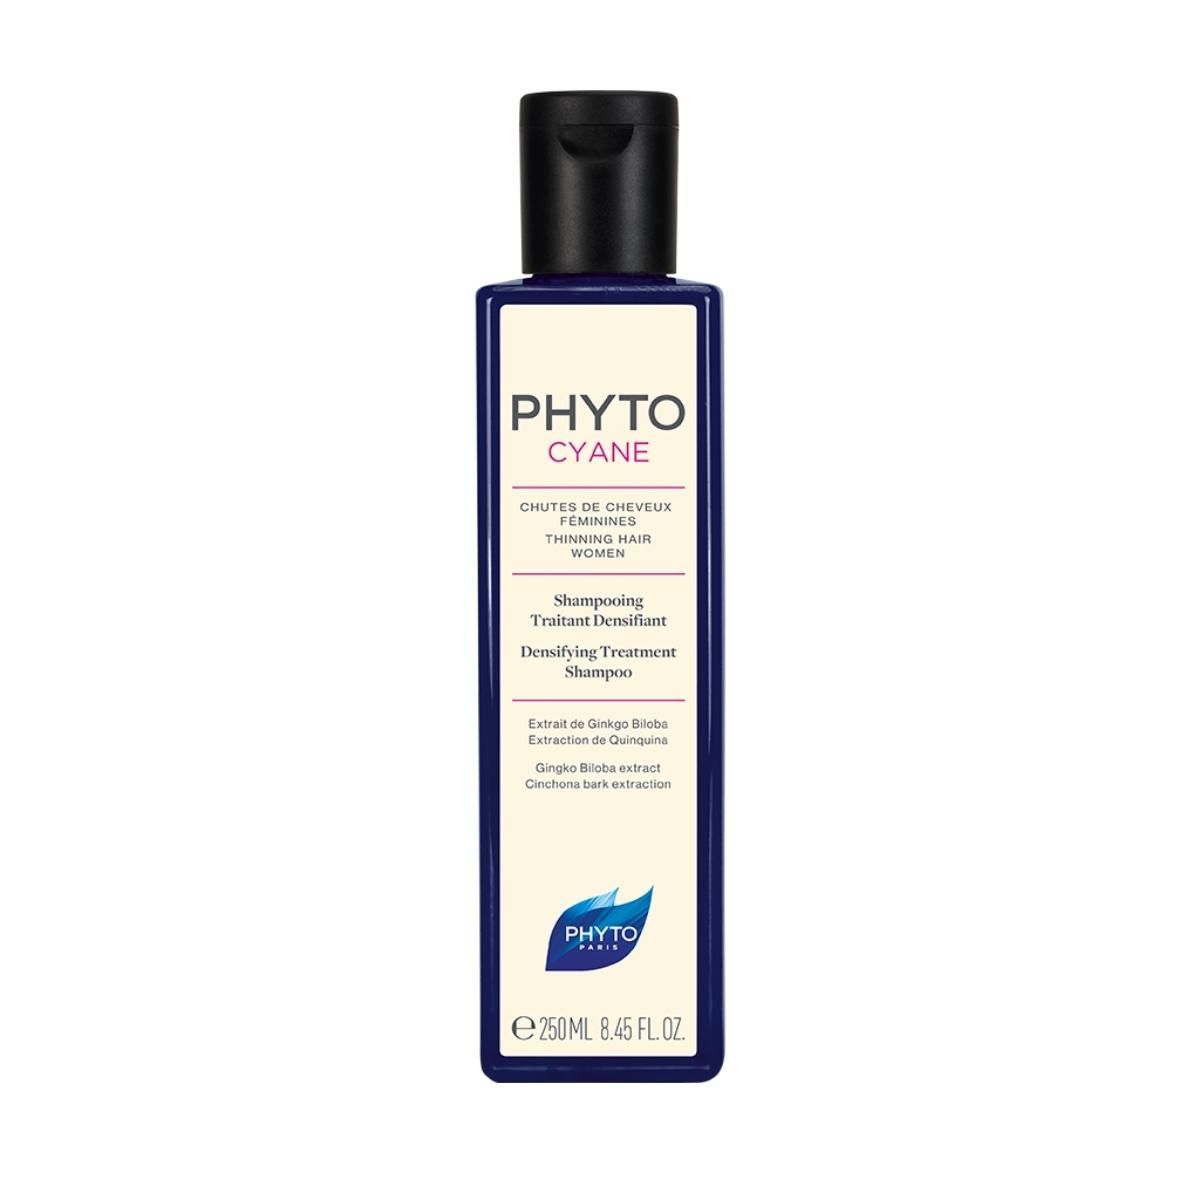 PHYTOCYANE Densifying Treatment Shampoo